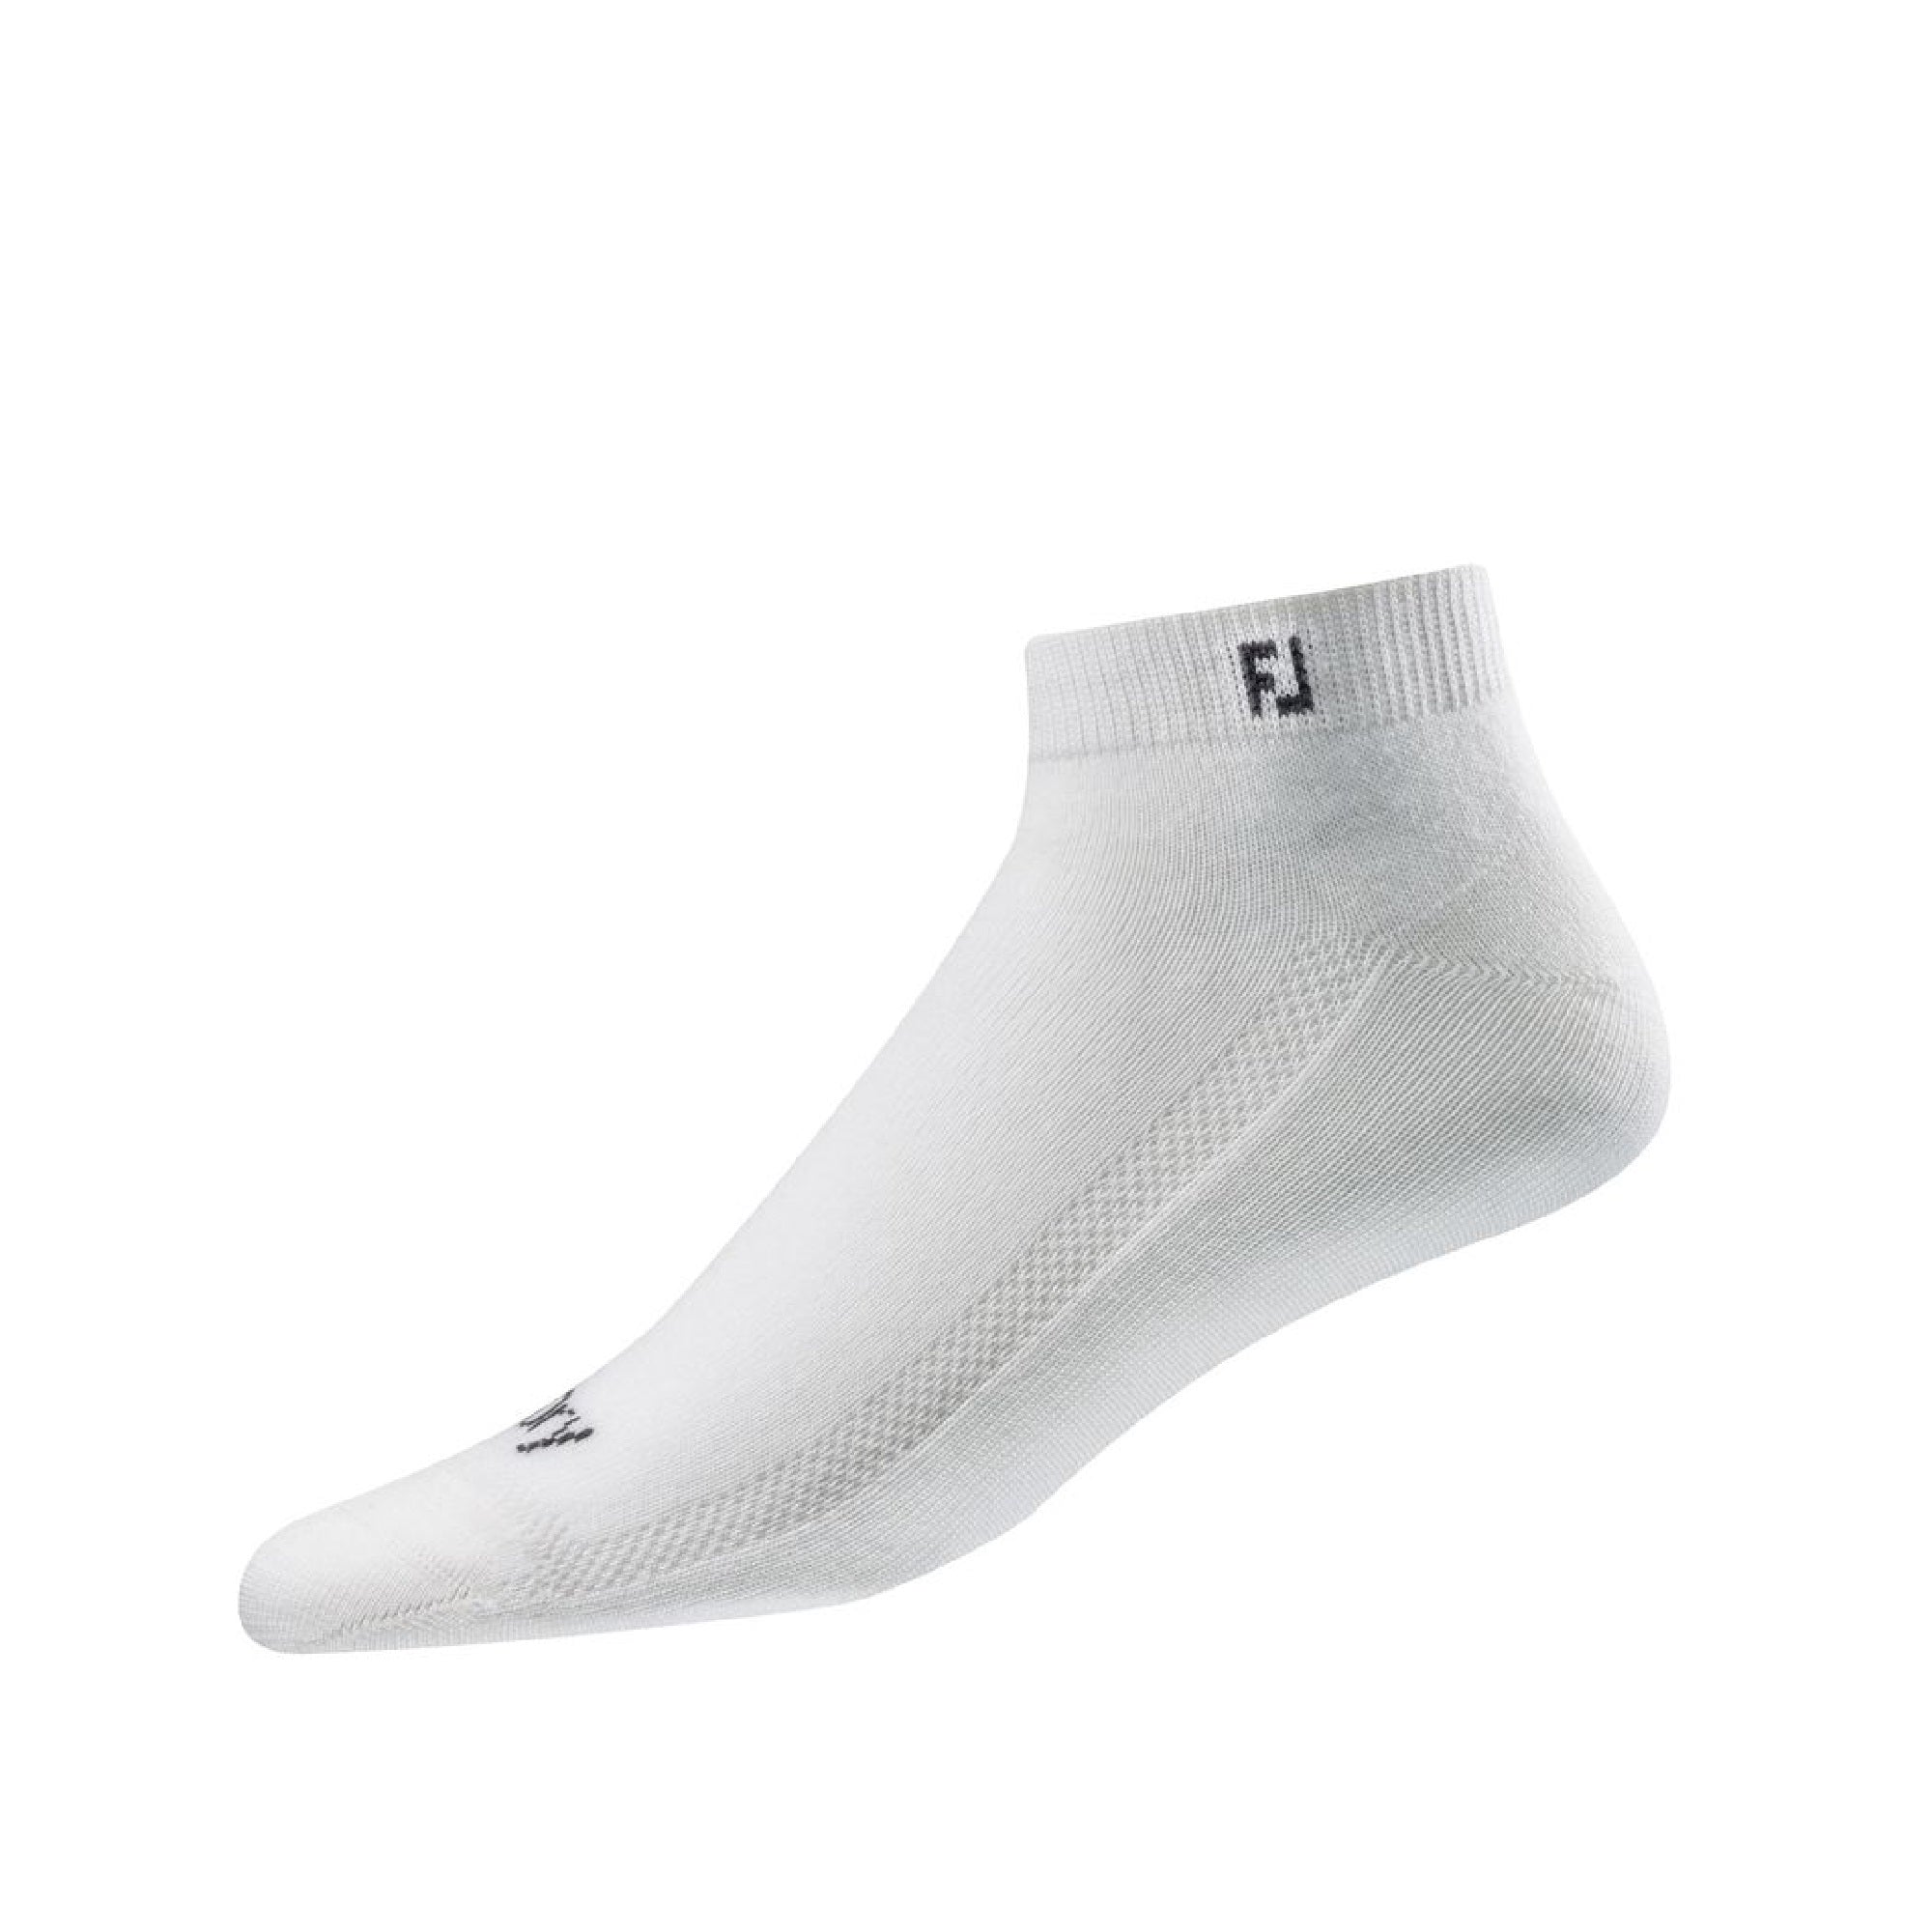 footjoy-prodry-lightweight-sport-golf-socks-17037